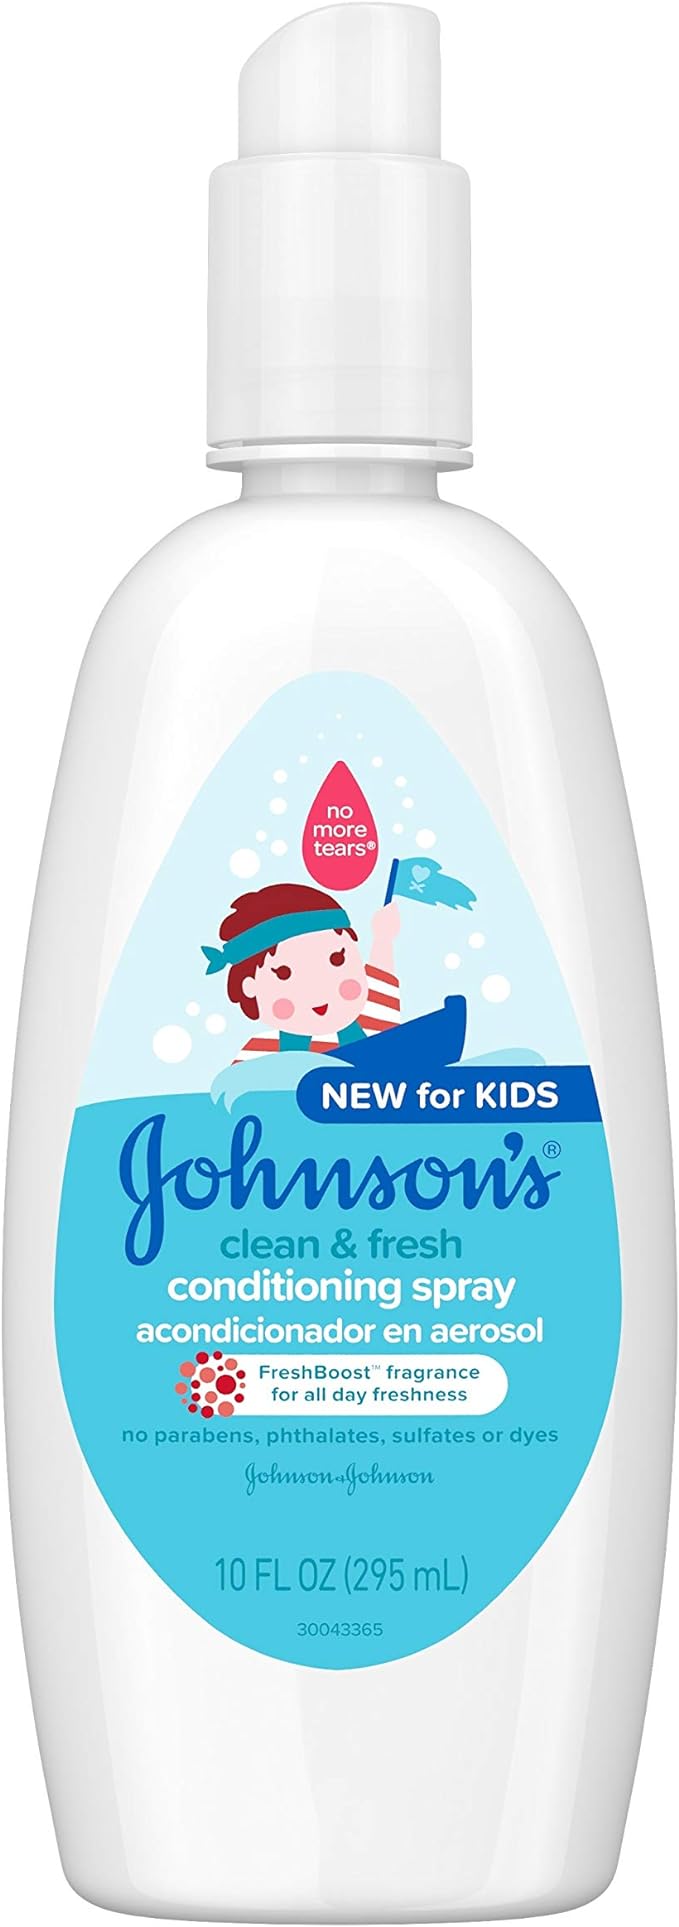 Johnson's Clean & Fresh Kids' Hair Conditioning Spray